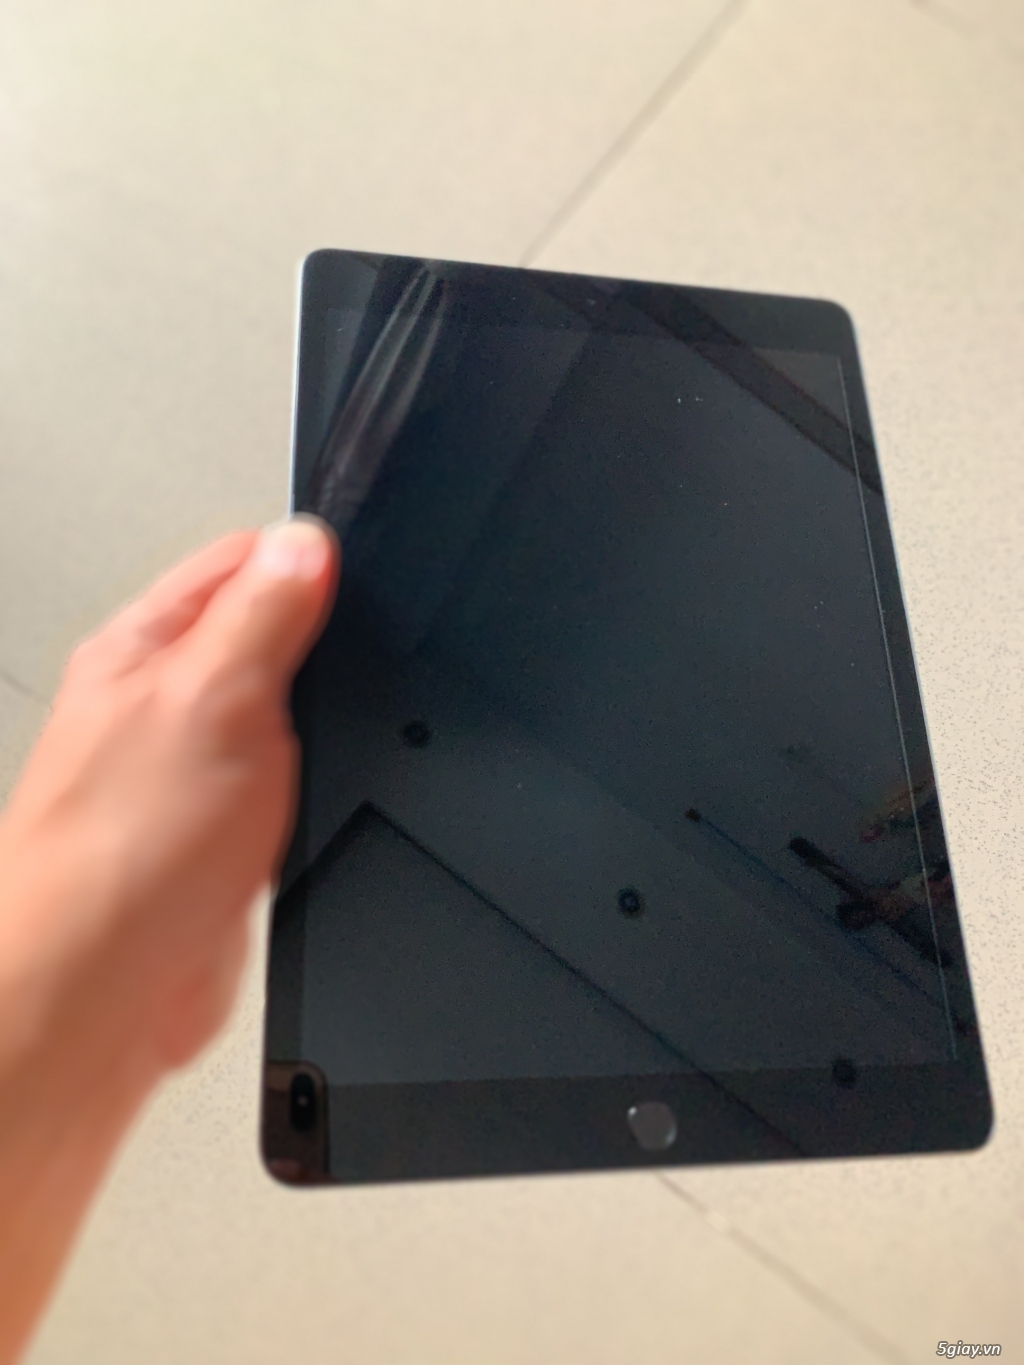 iPad Gen 7 32Gb Wifi + 4G màu Gray, giá rẻ